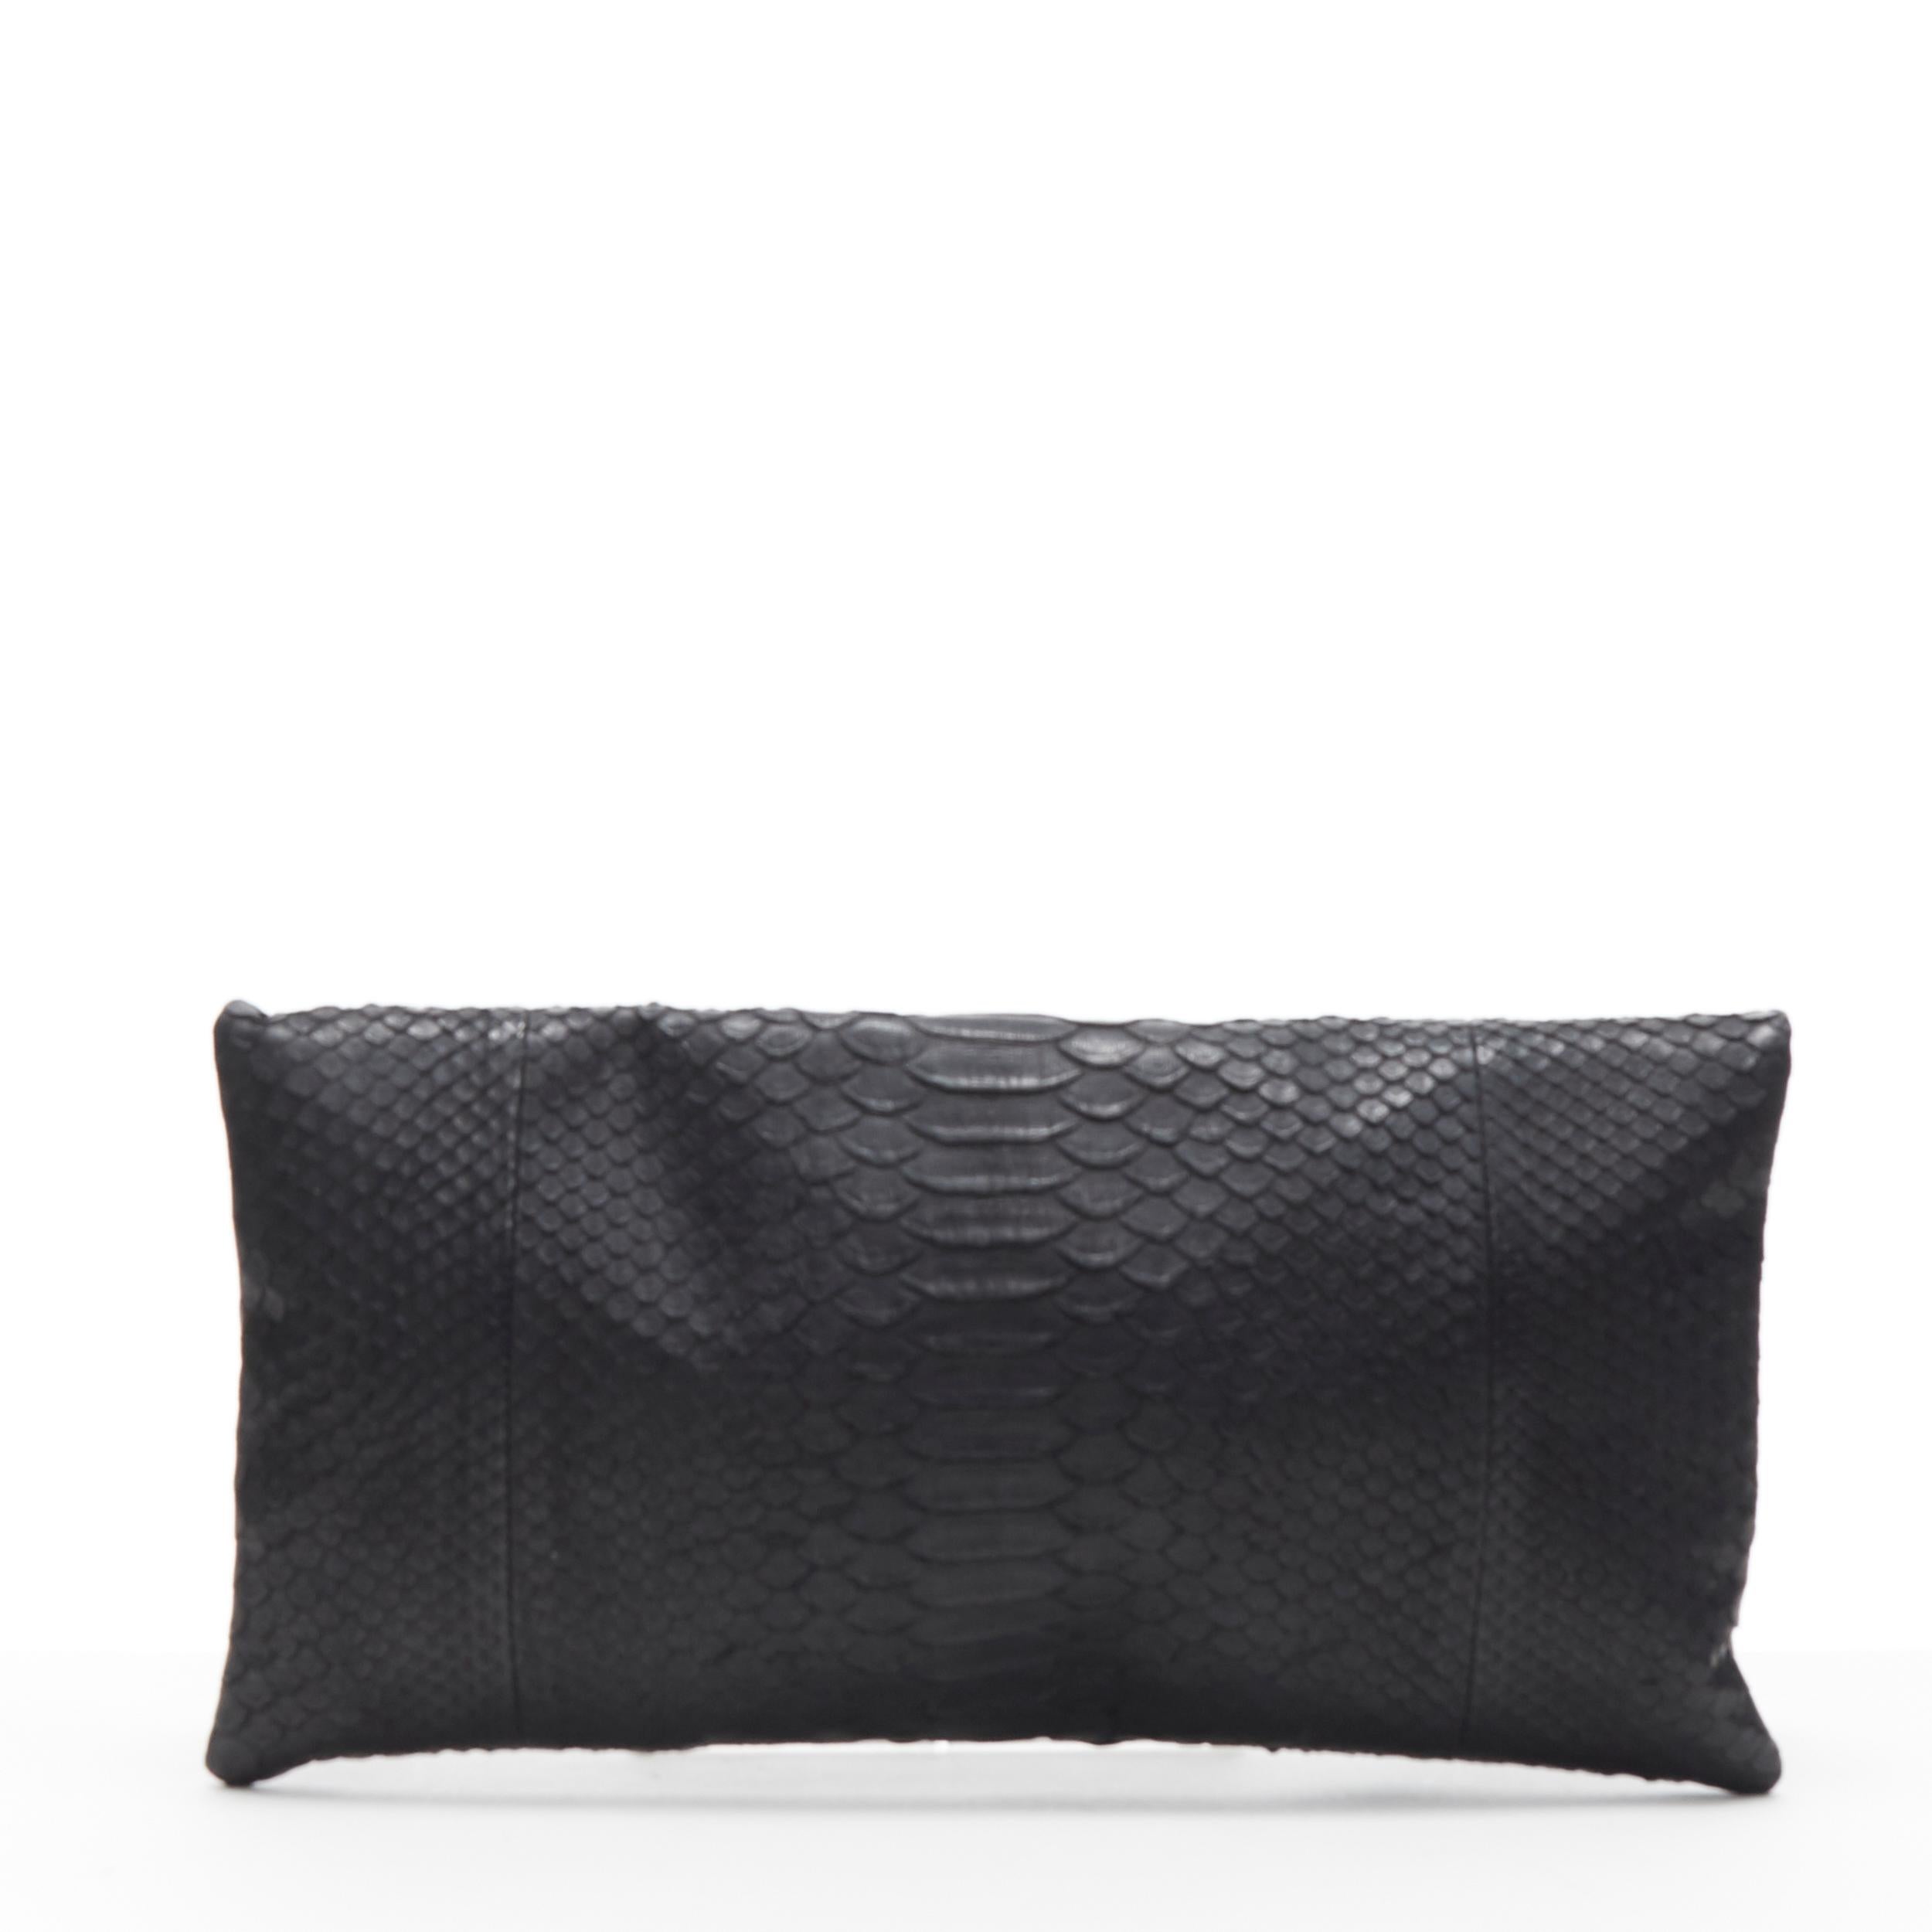 Black AKKESOIR black genuine scaled leather foldover rectangular clutch bag